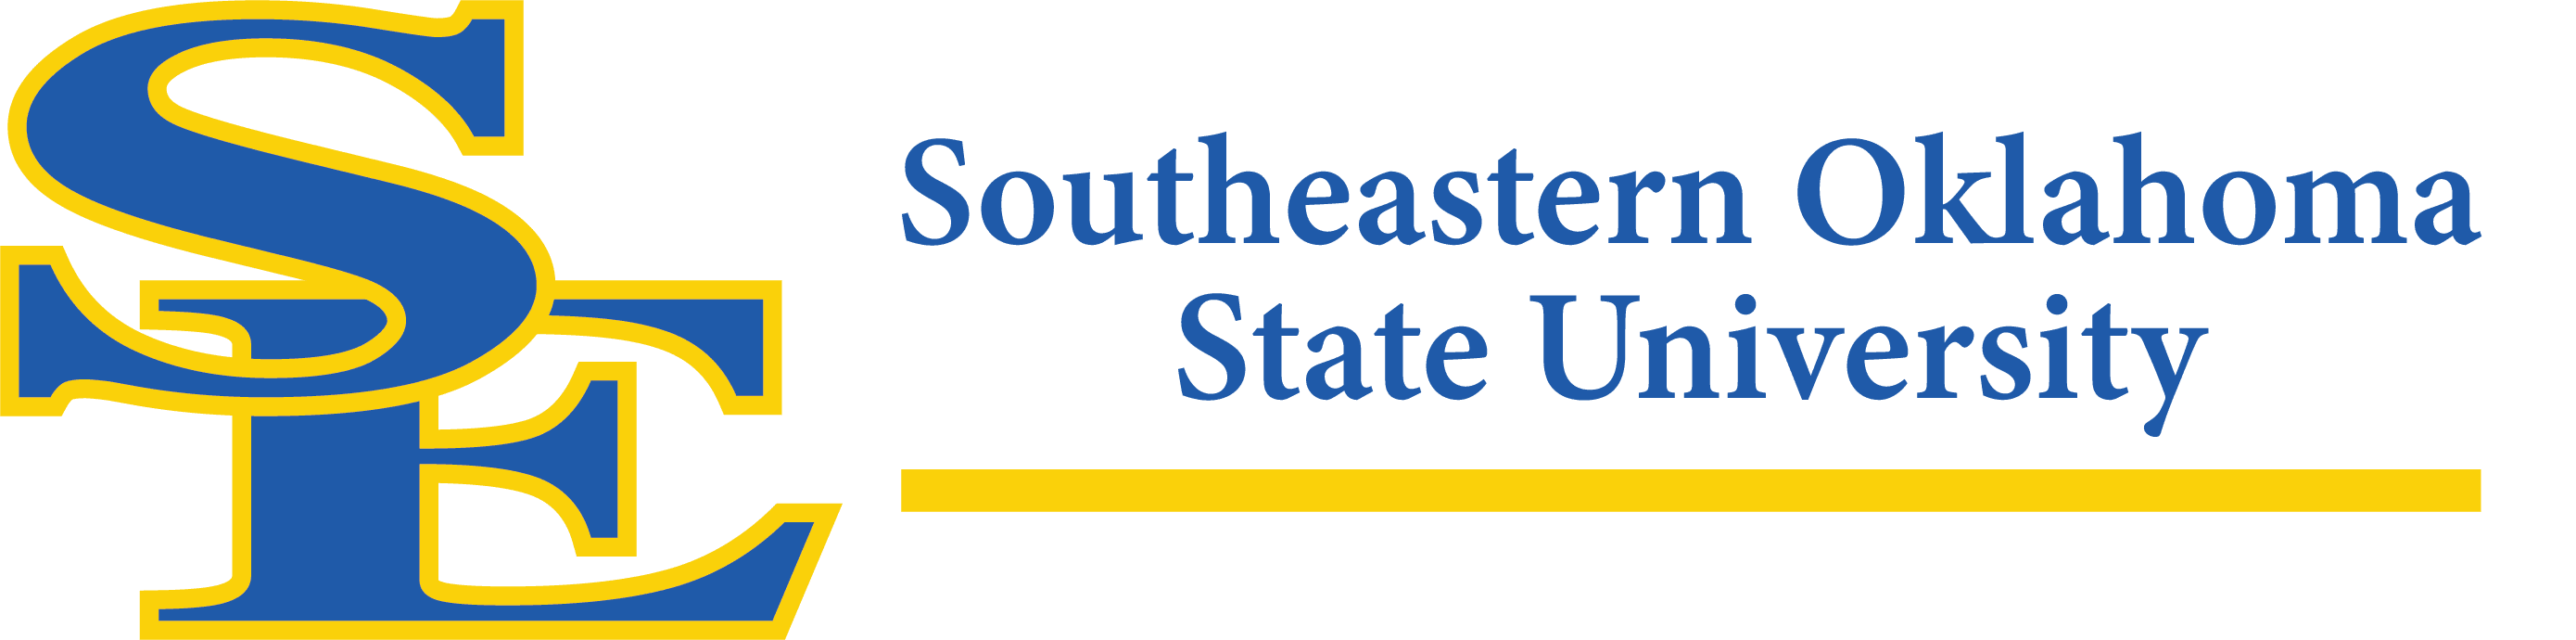 Southeaster Oklahoma State University Logo